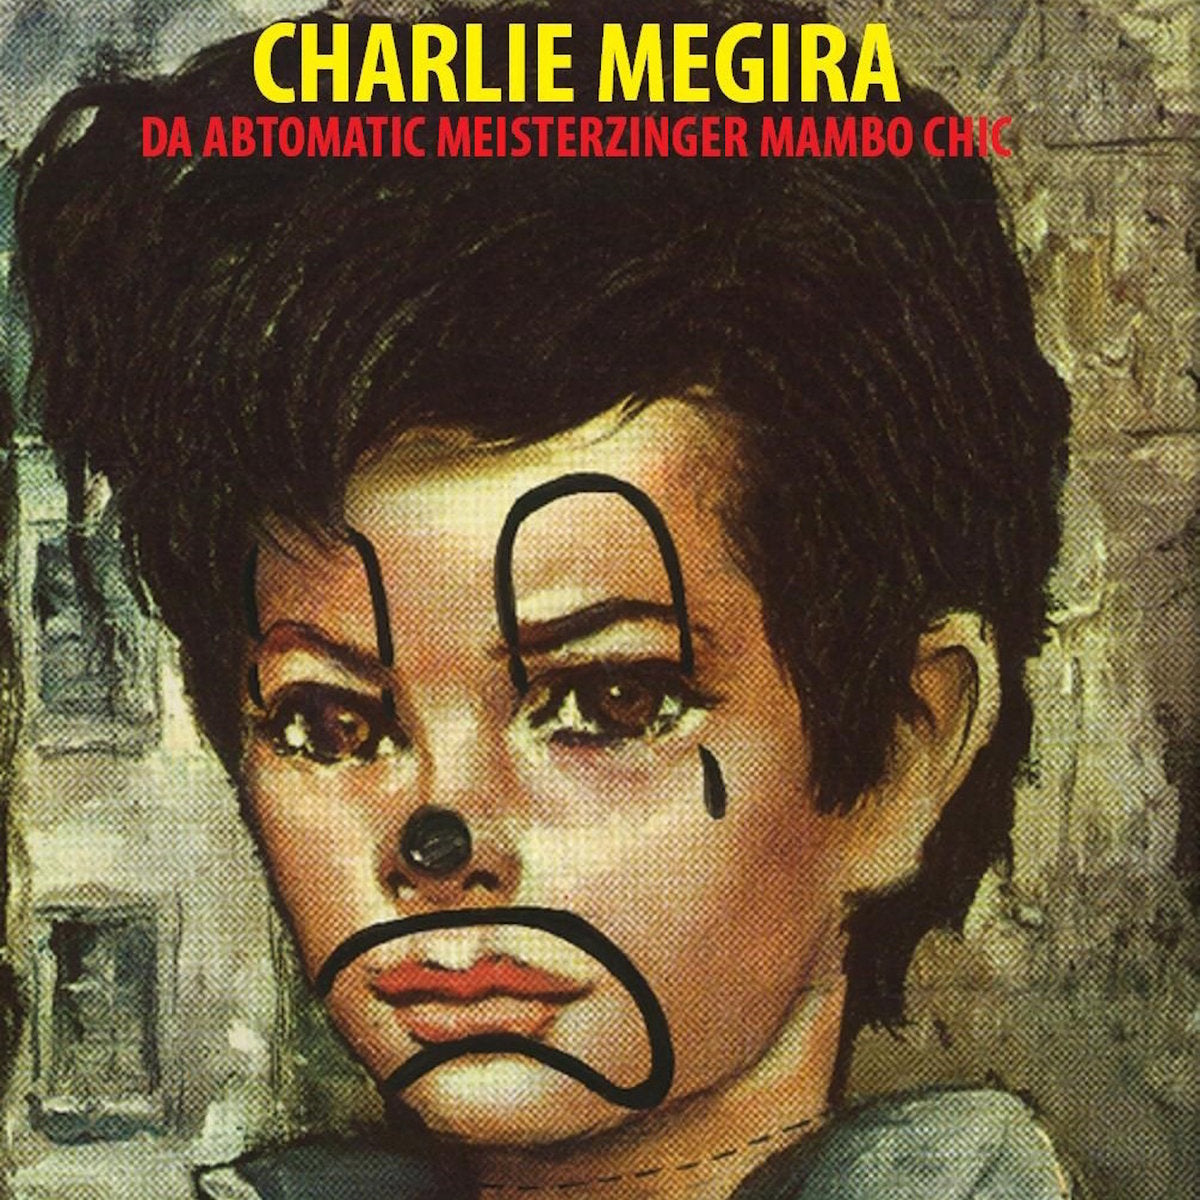 Charlie Megira - The Abtomatic Miesterzinger Mambo Chic